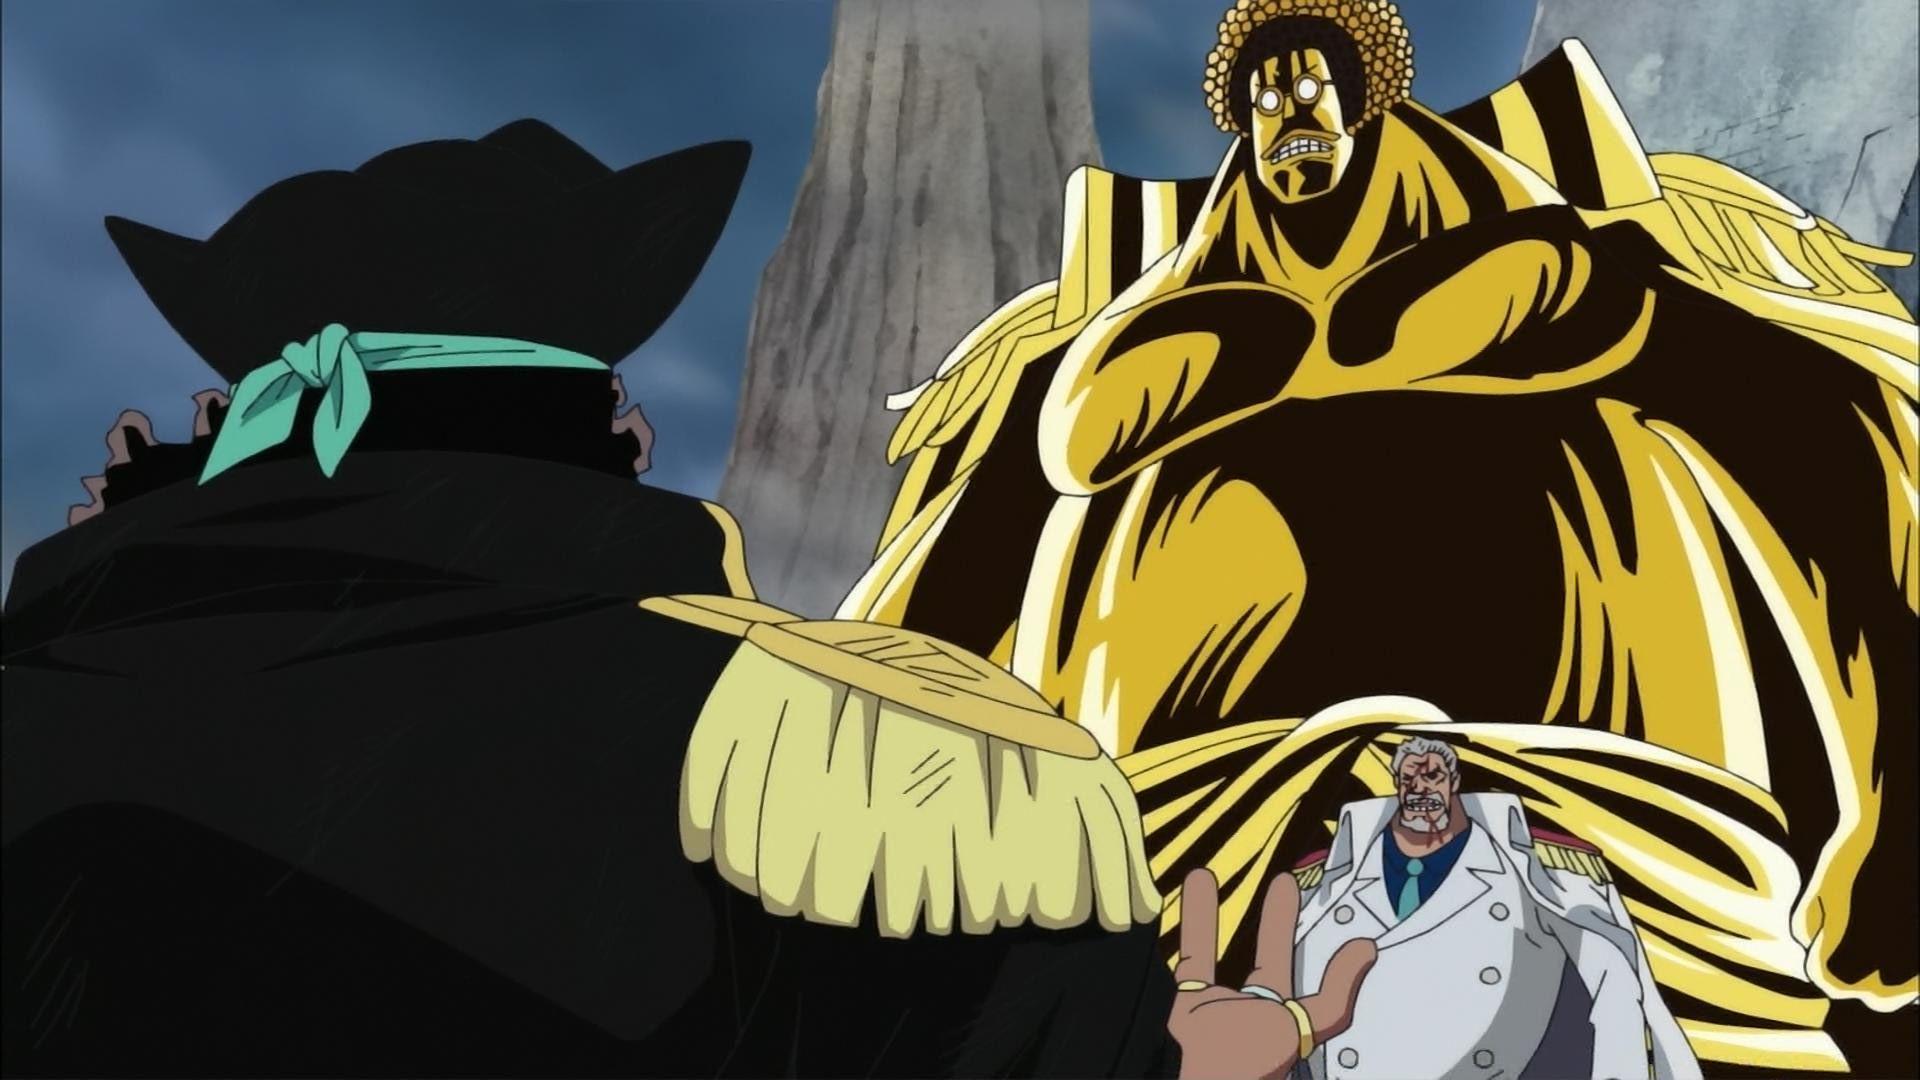 Garp and Sengoku vs Blackbeard wallpaper. Free Anime One Piece